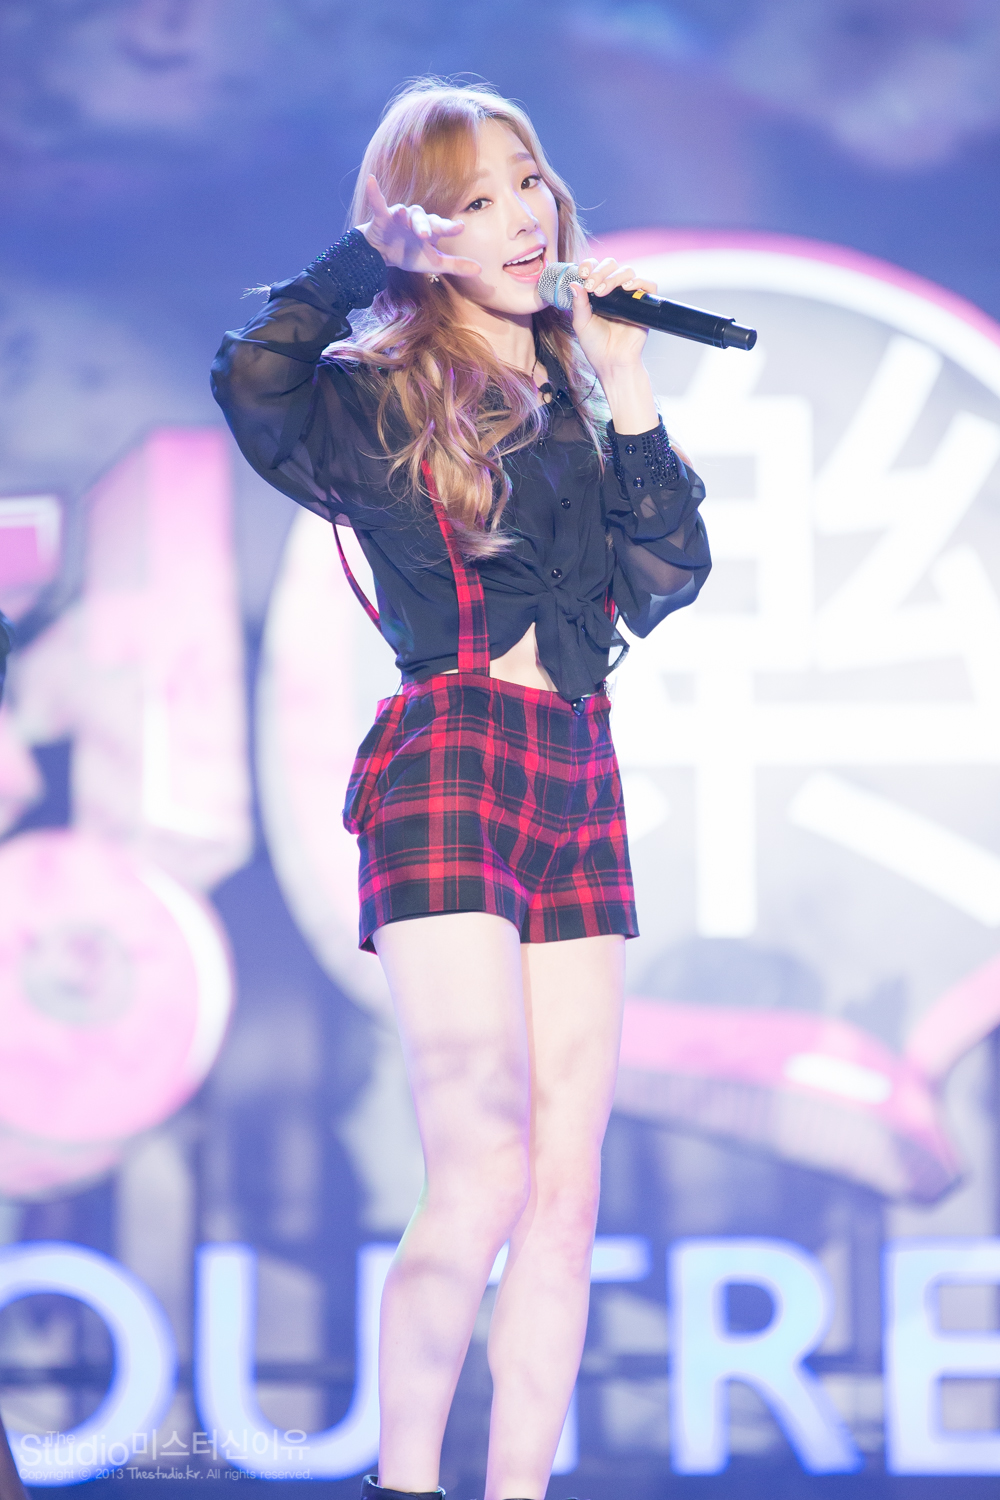 [PIC][11-11-2014]TaeTiSeo biểu diễn tại "Passion Concert 2014" ở Seoul Jamsil Gymnasium vào tối nay - Page 4 231FF1495462E1F307158C